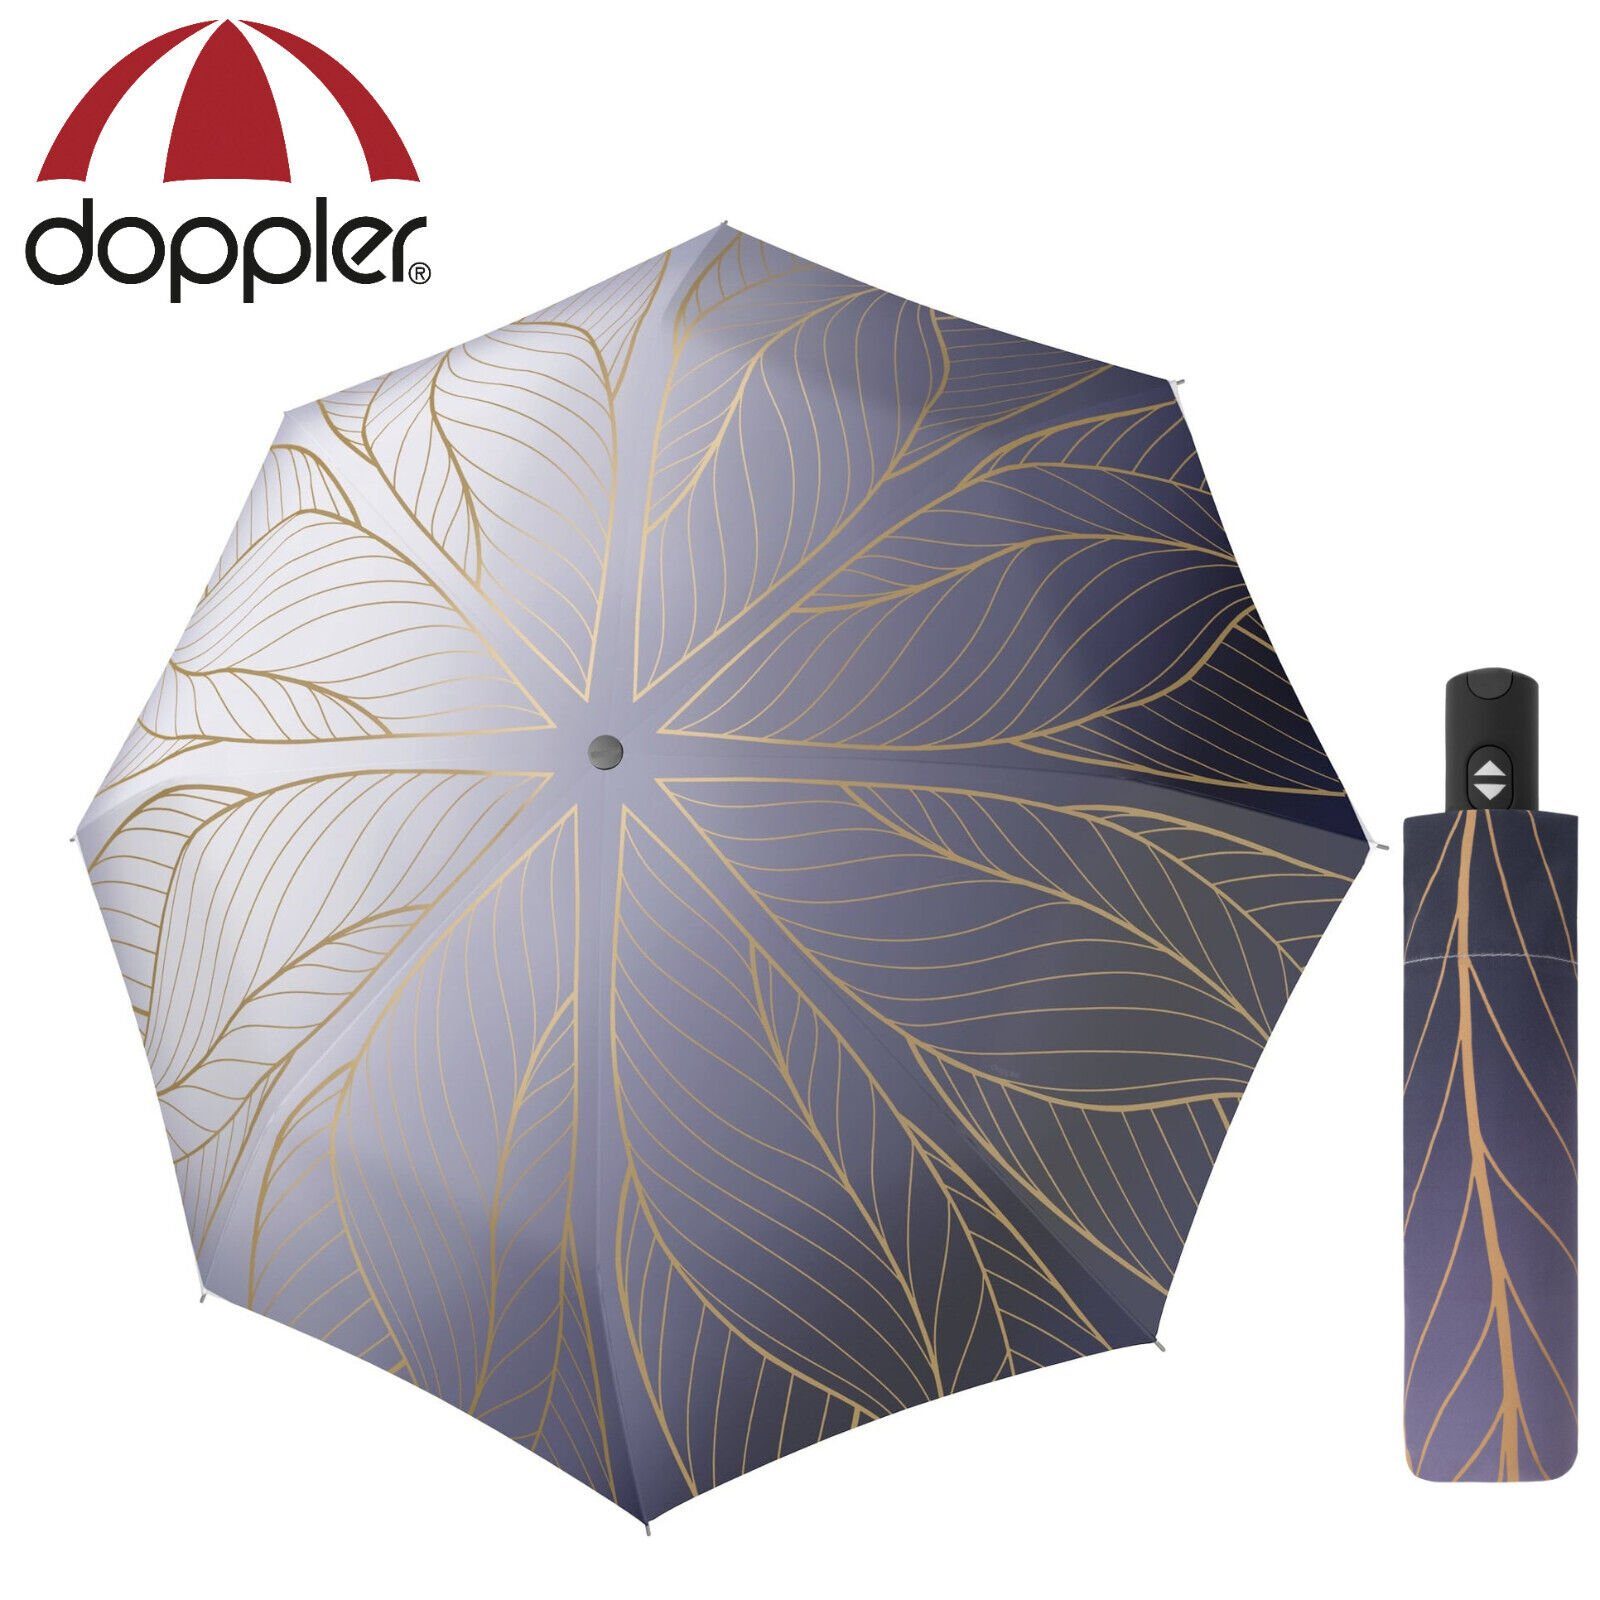 doppler® Taschenregenschirm Regenschirm magic carbonsteel 150km/h sturmsicher Golden Blue bis